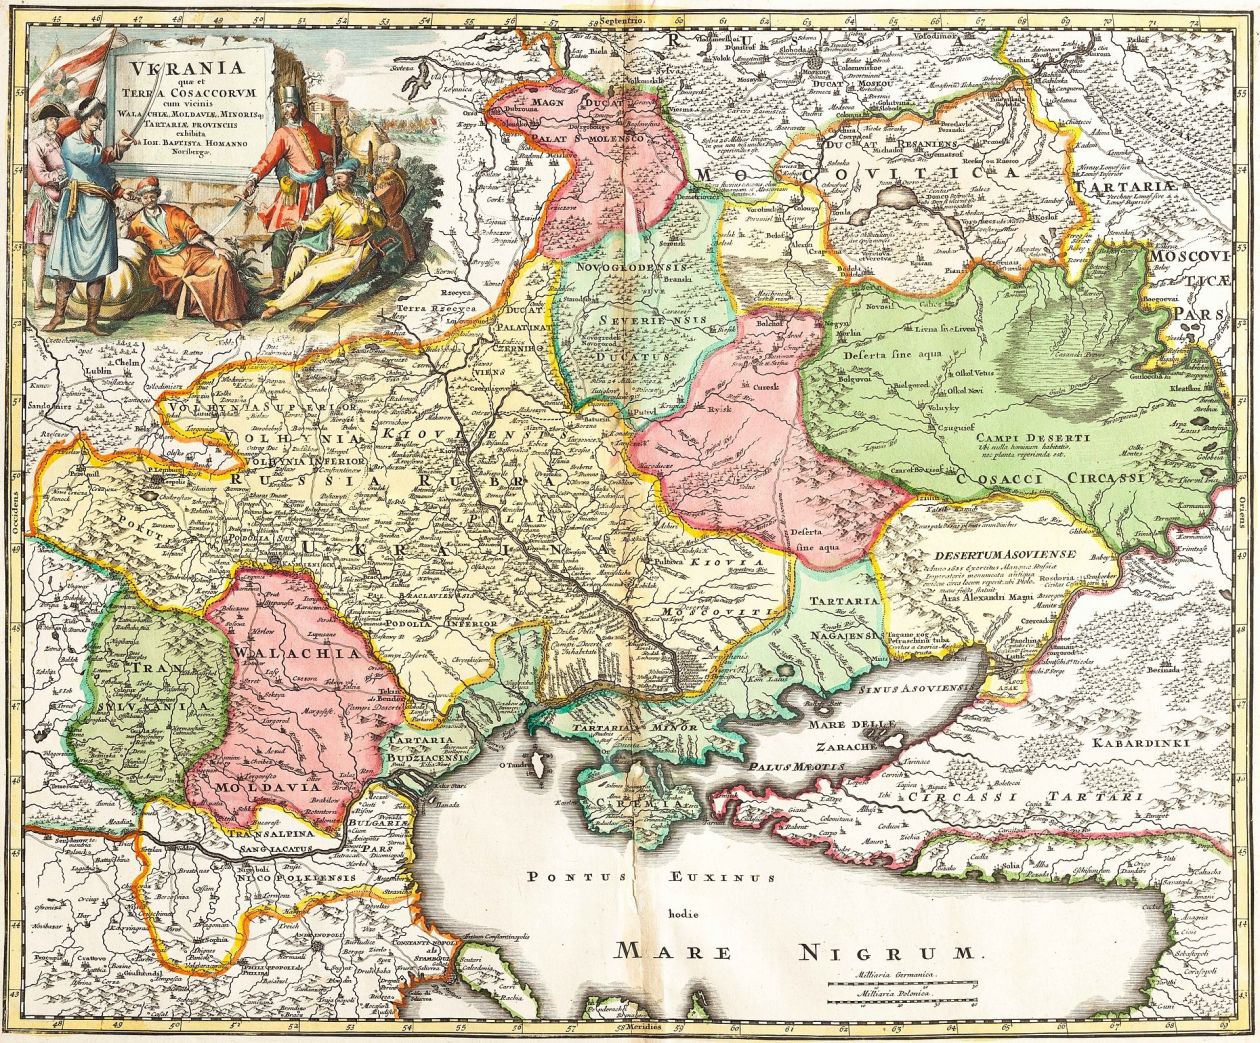 Ukrania quae et Terra Cosaccorum cum vicinis Walachiae, Moldoviae, Johann Baptiste Homann (Nuremberg, 1720). 